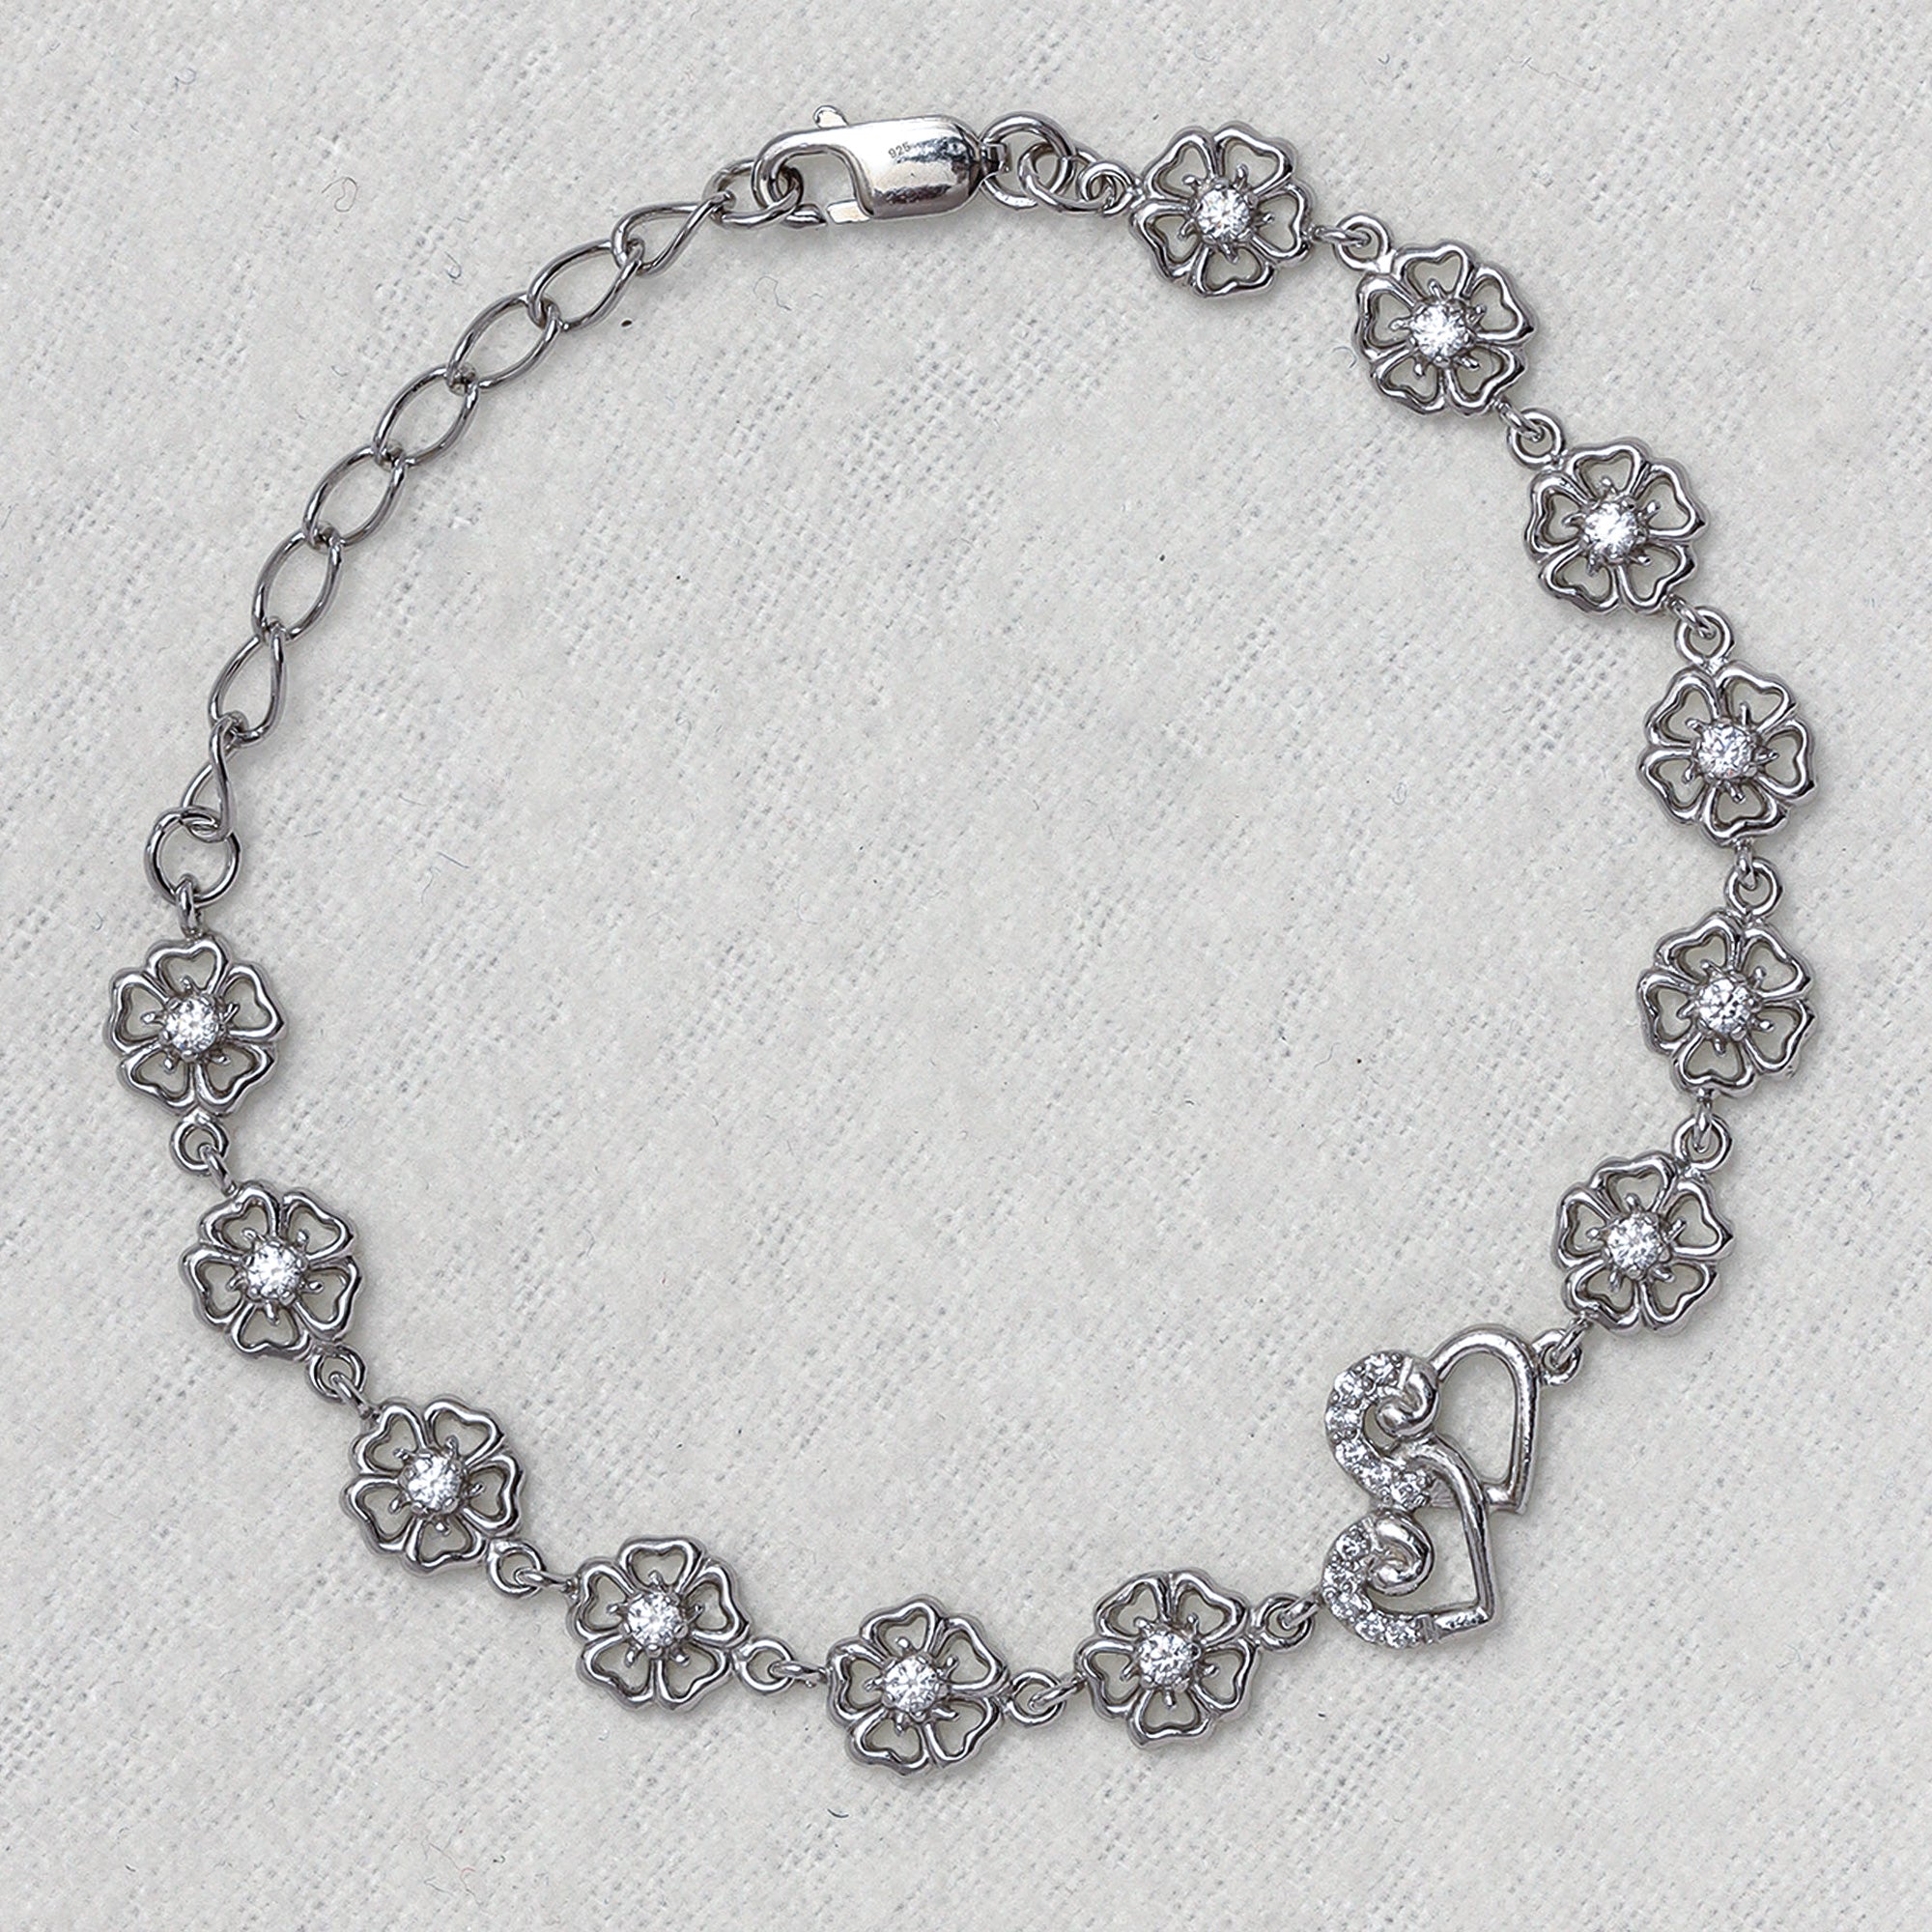 925 Sterling Silver Designer Cz Heart and Flower Style Tennis Bracelet for Women and Girls